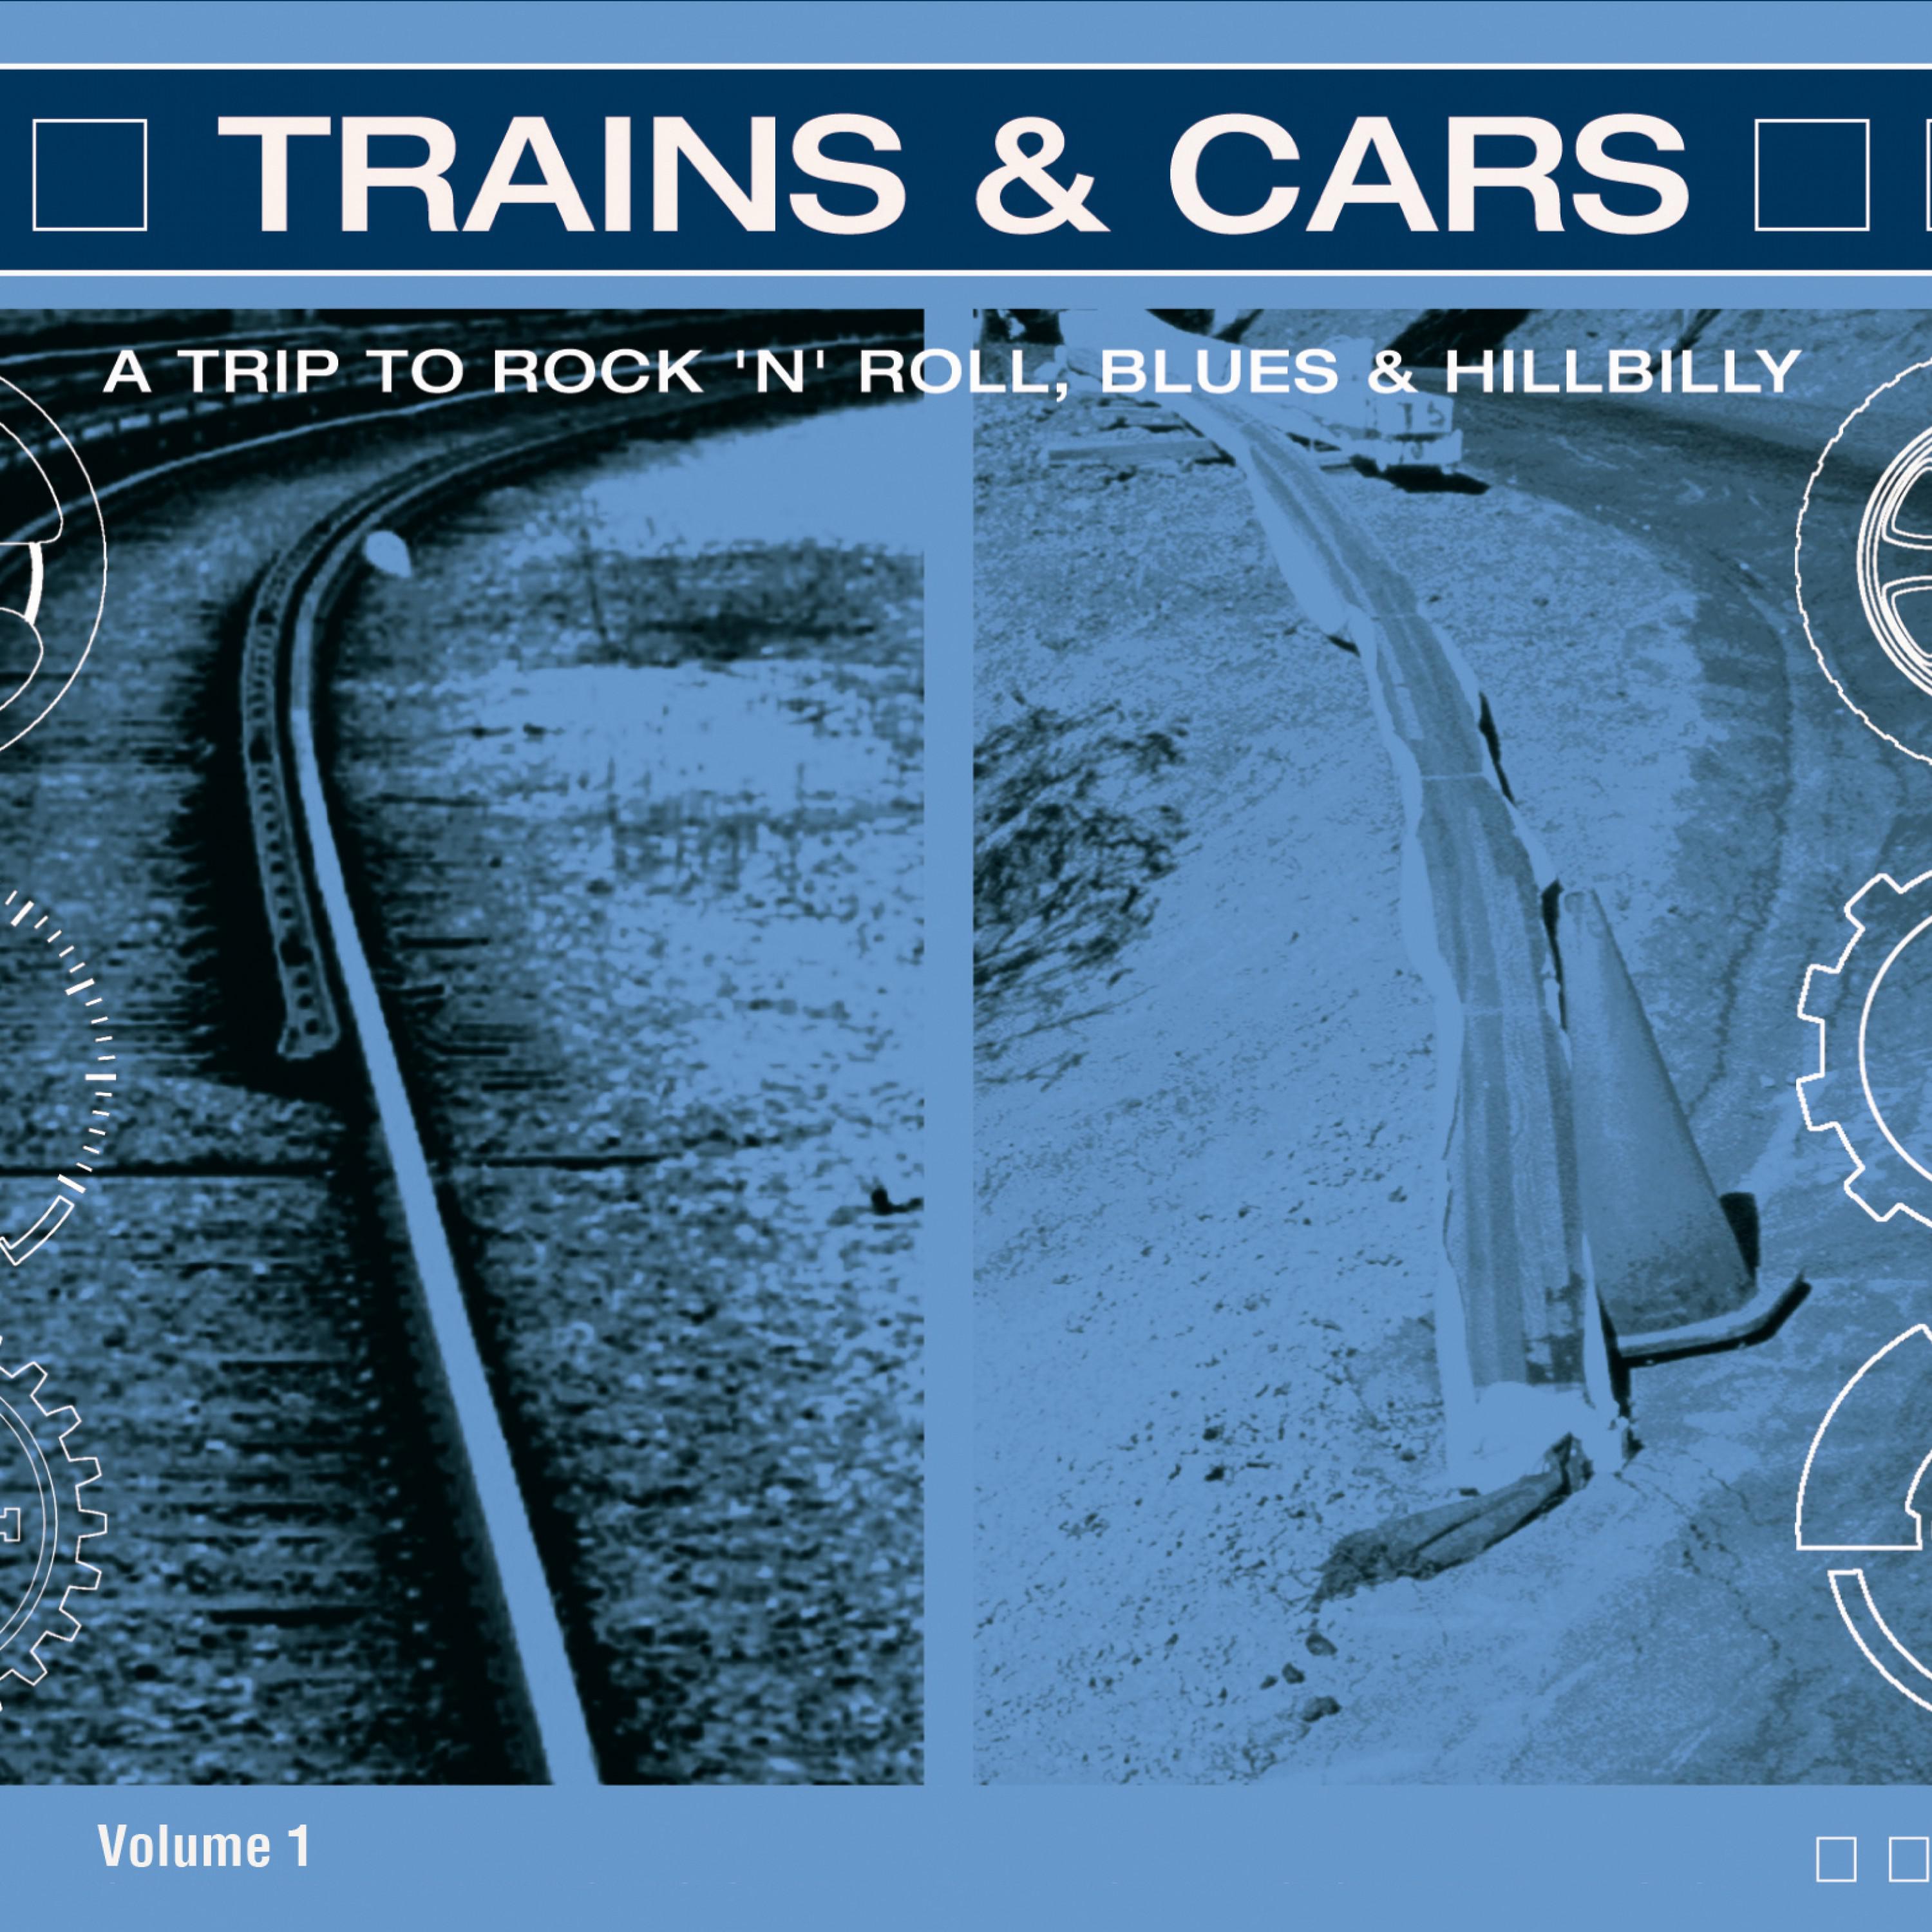 Trains & Cars - A Trip to Rock 'n' Roll Vol. 1